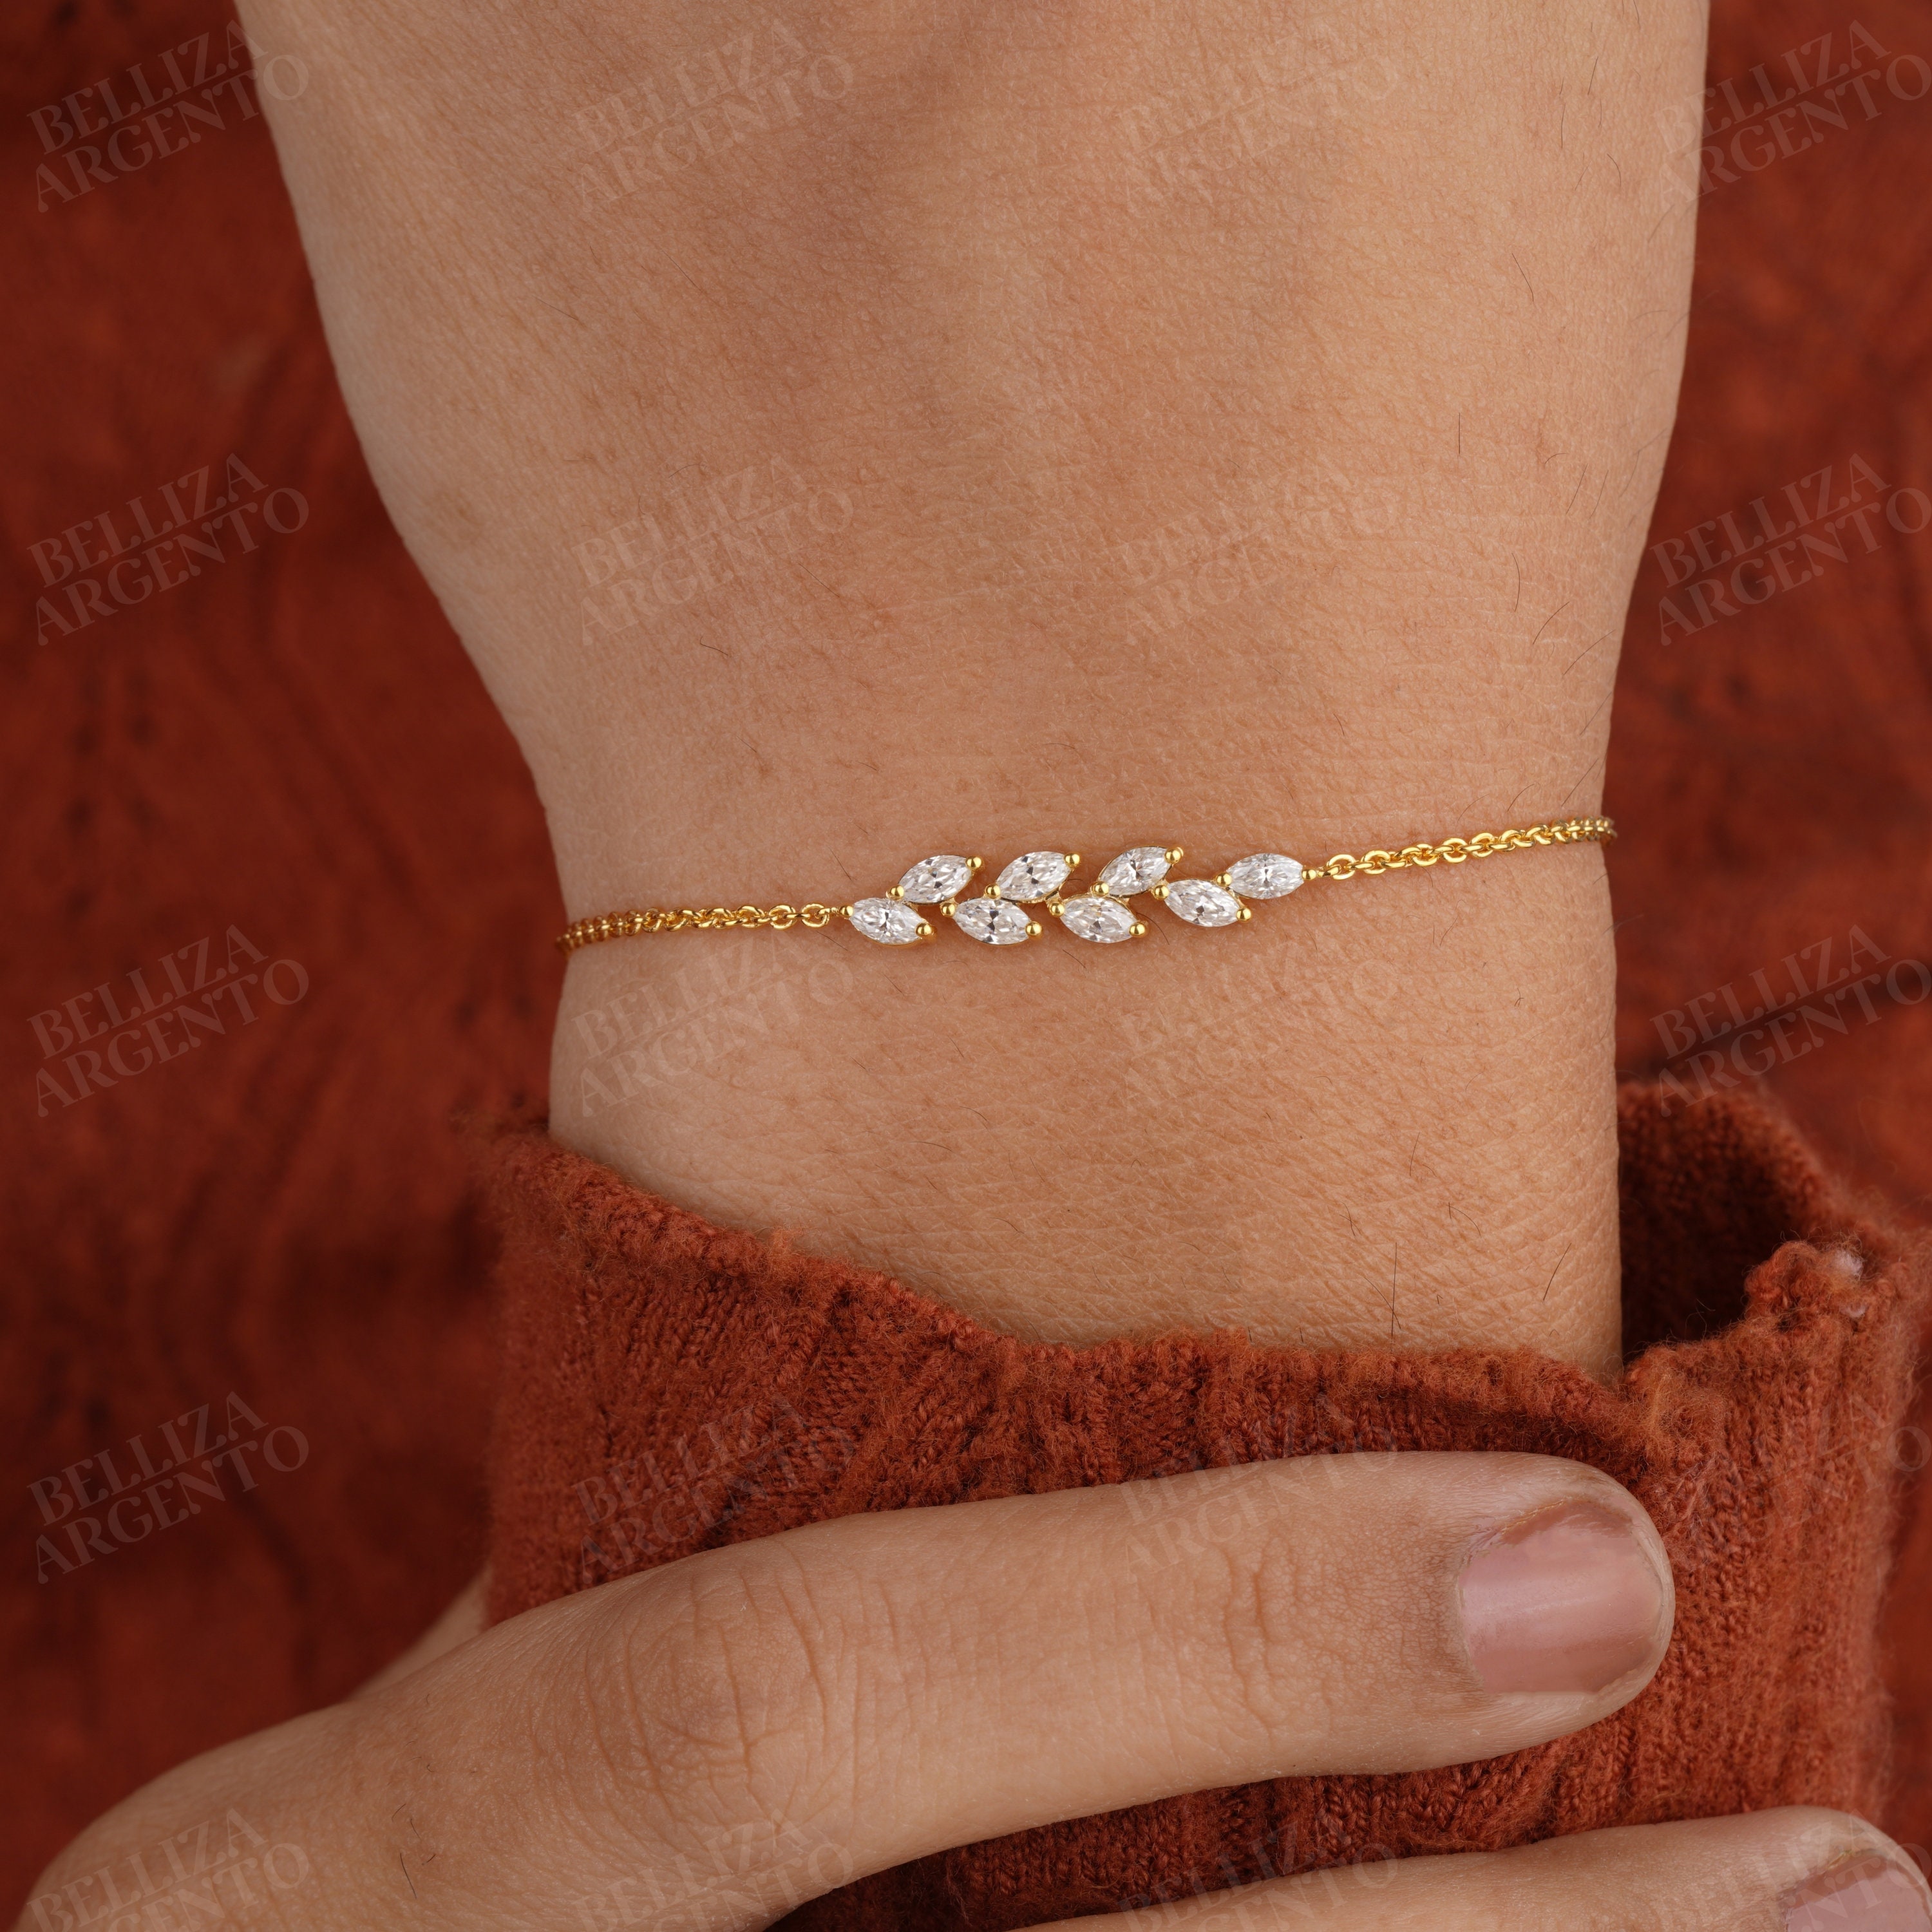 17 7/8 CTW Marquise Lab Grown Diamond Flower Fashion Bracelet - 7 Inches 14K White Gold FG, VS2+